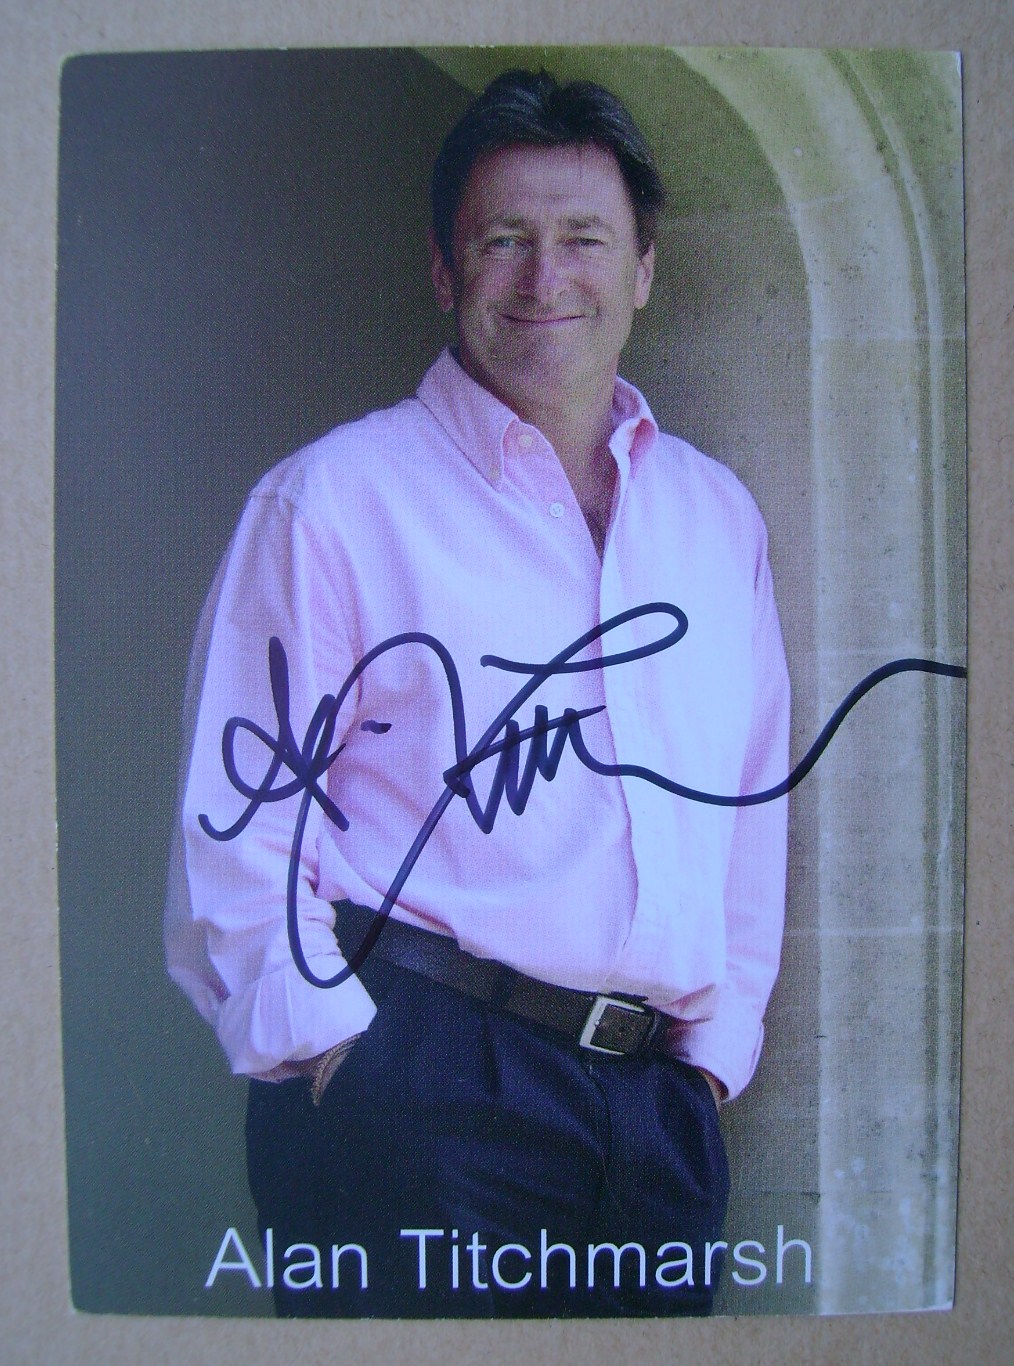 Alan Titchmarsh autograph (hand-signed photograph)